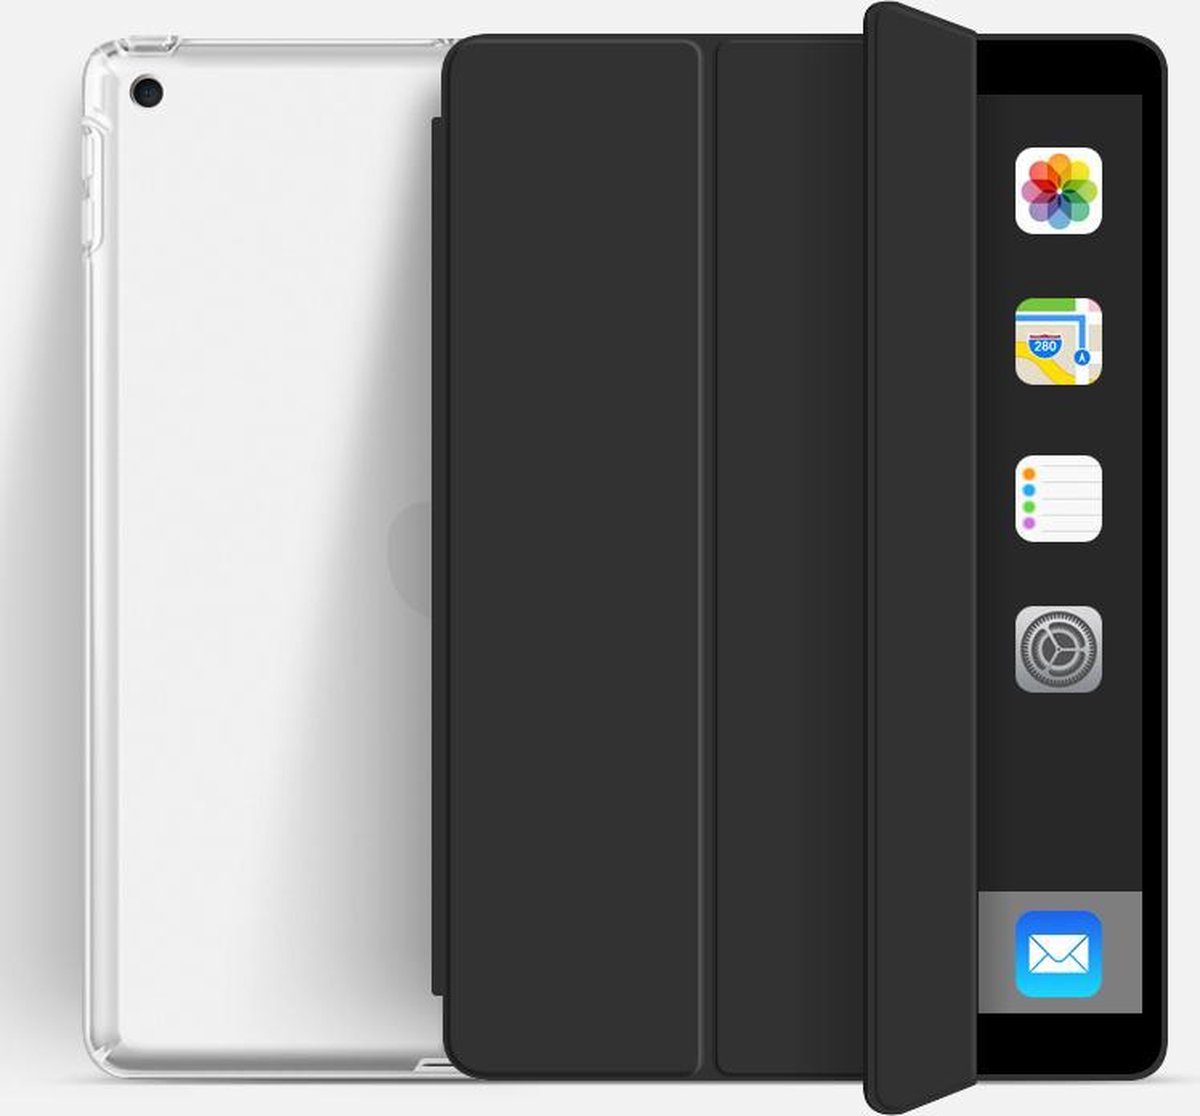 Ipad 5/6 transparant (2017/2018) - 9.7 inch – Ipad hoes – soft cover – Hoes voor iPad – Tablet beschermer - zwart